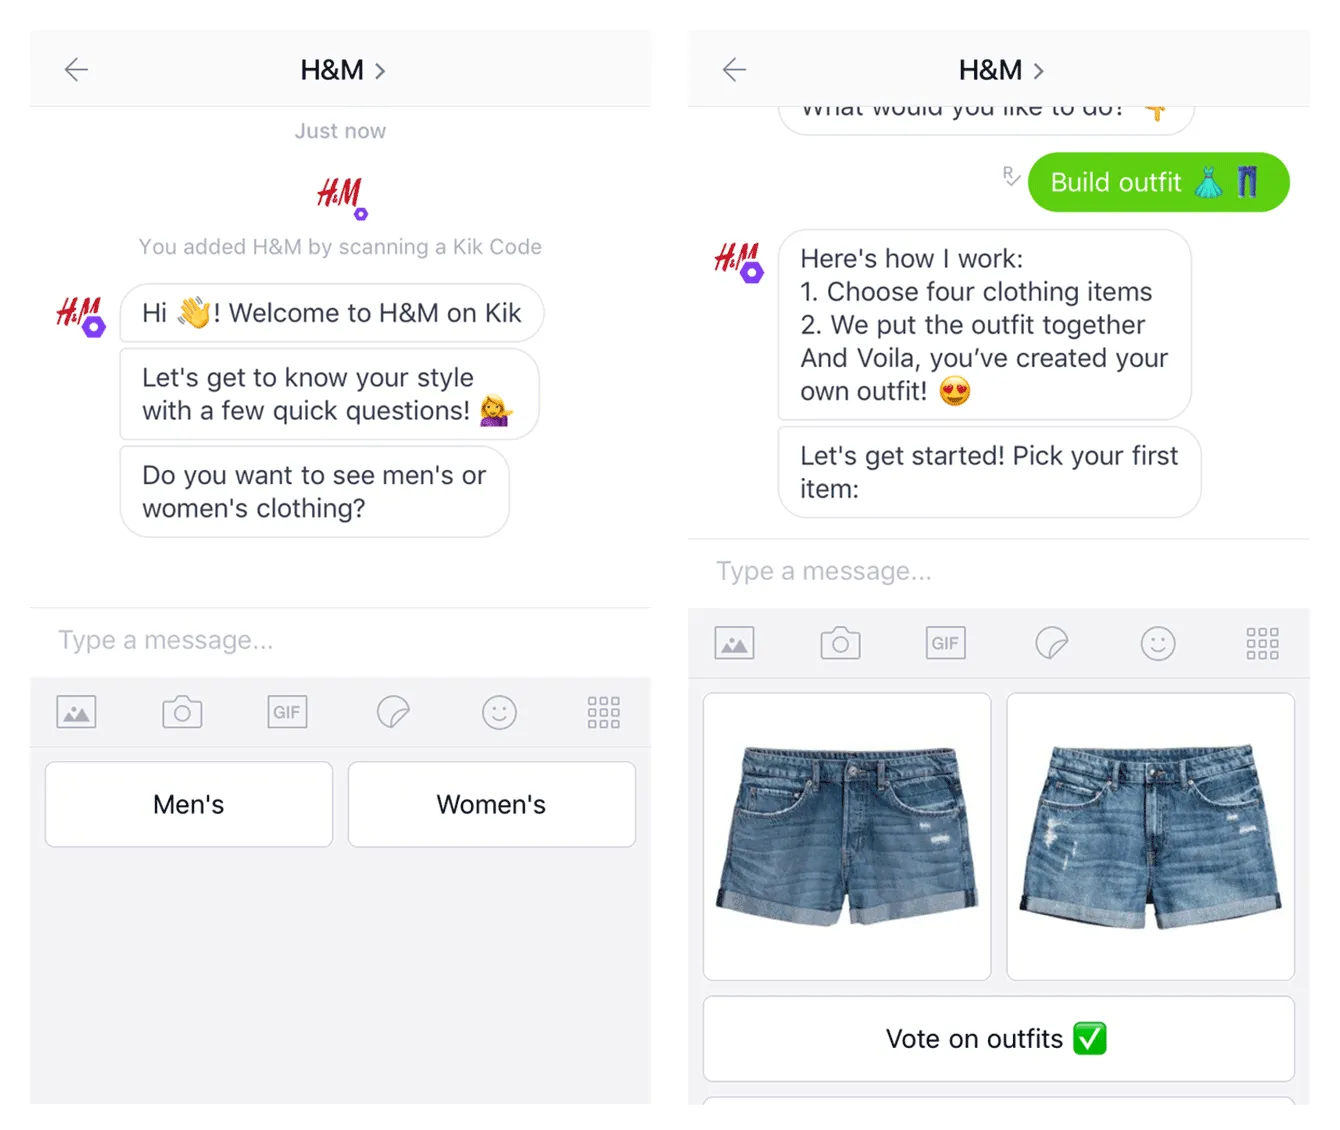 H&M's chatbot in action on the messaging platform Kik